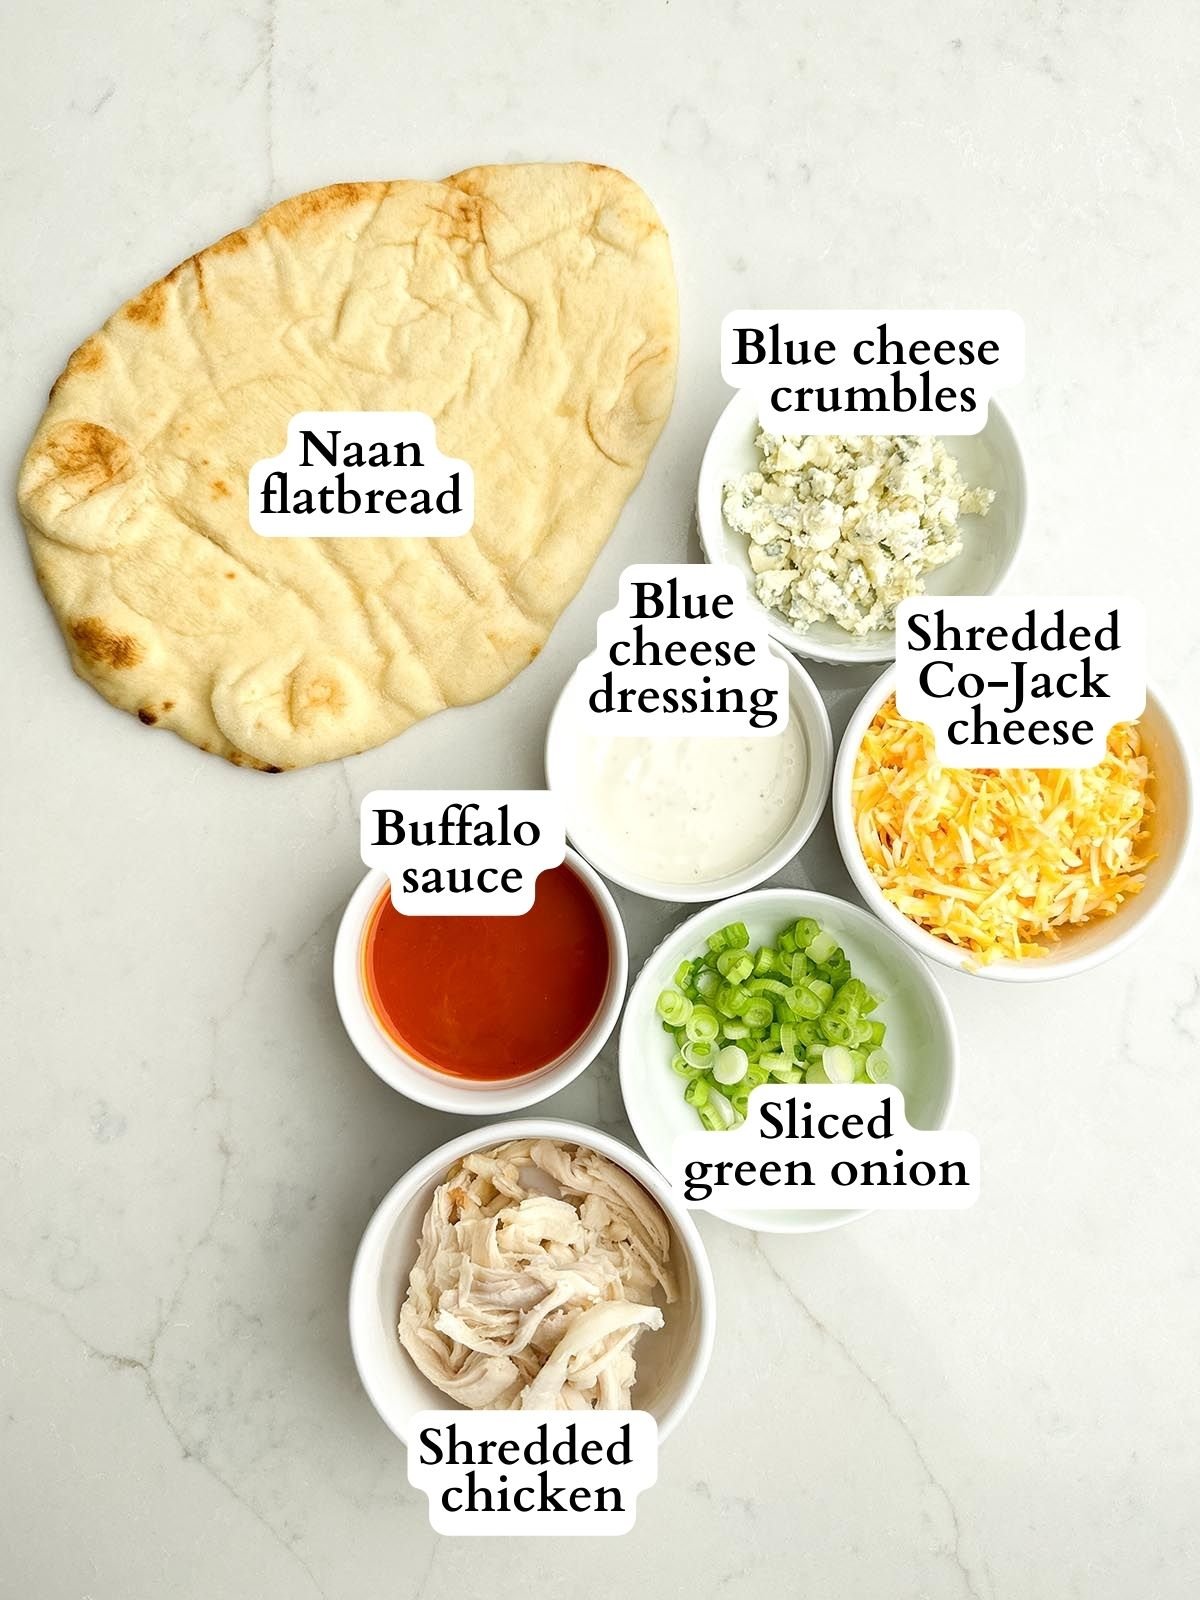 buffalo chicken flatbread ingredients